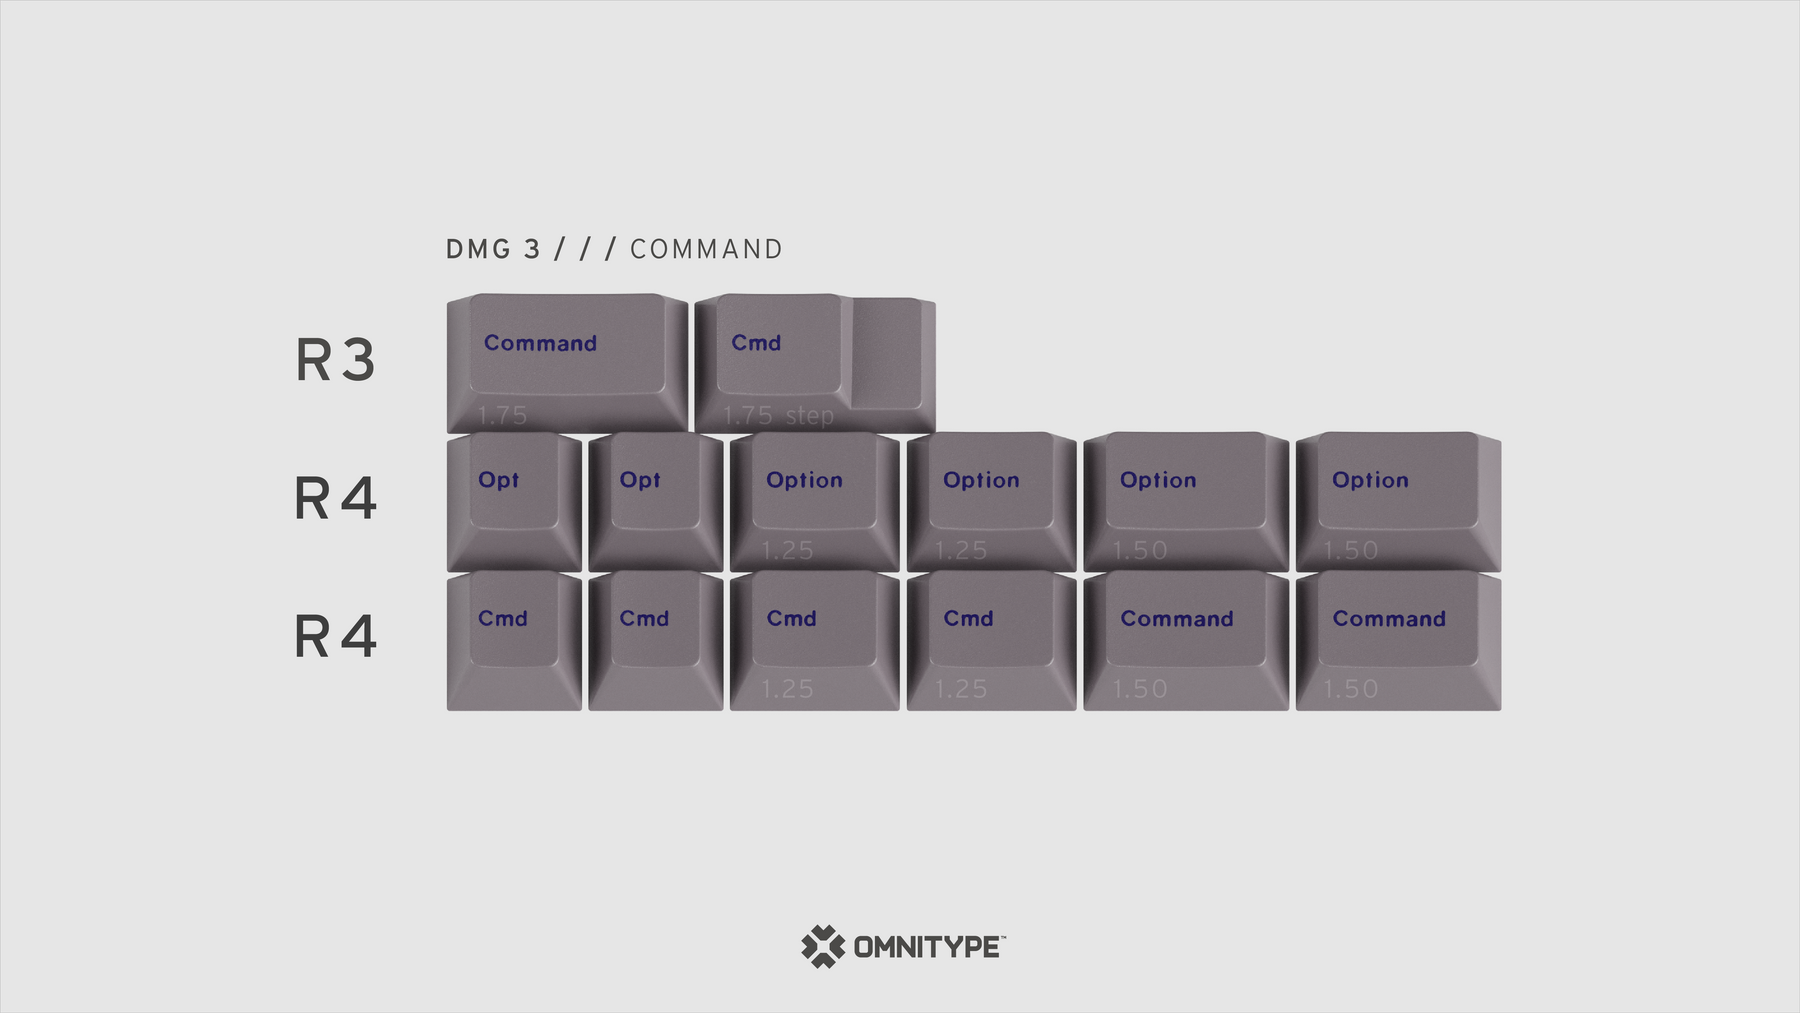 GB] GMK DMG - A Gameboy inspired keyset FINAL DAY MOQ REACHED